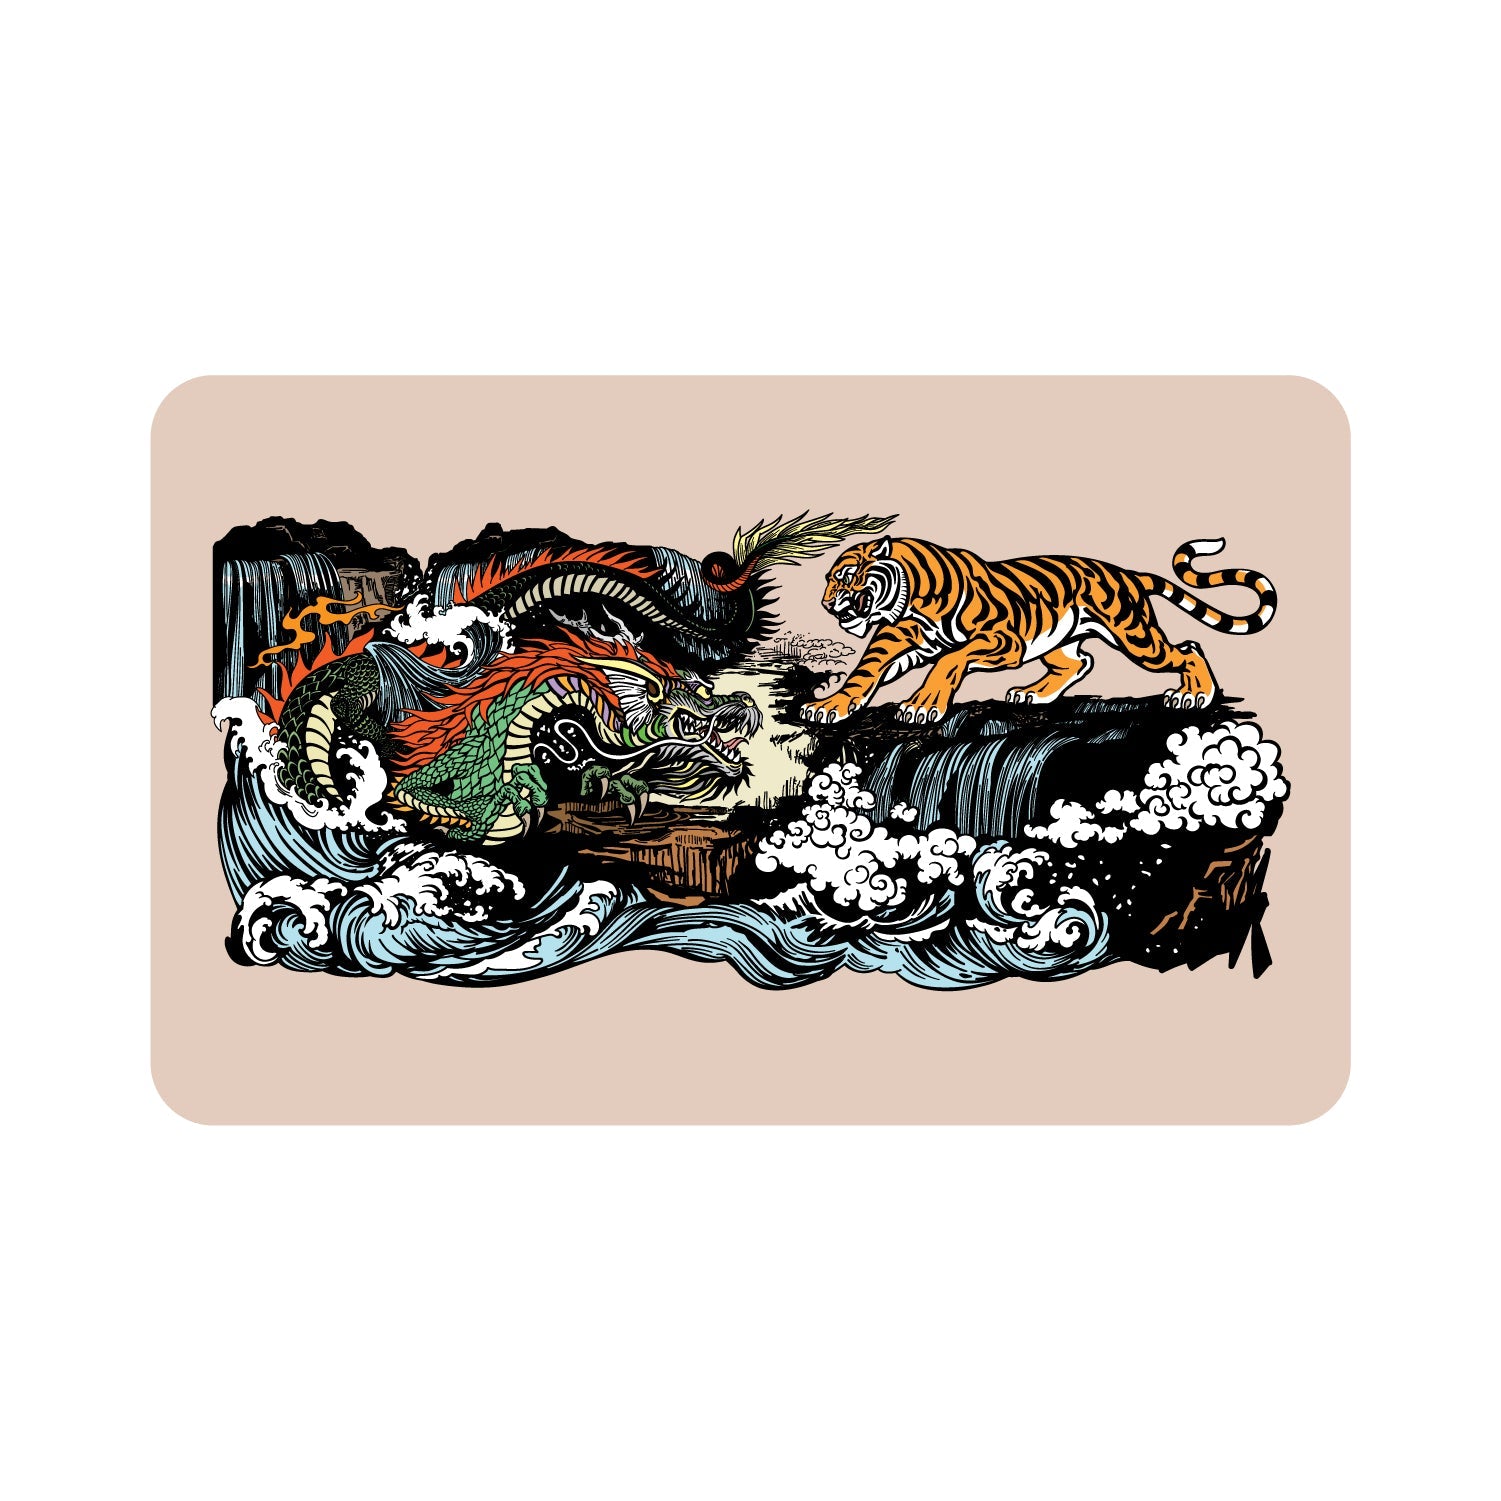 Prints Series Mouse Pad, Dragon Versus Tiger